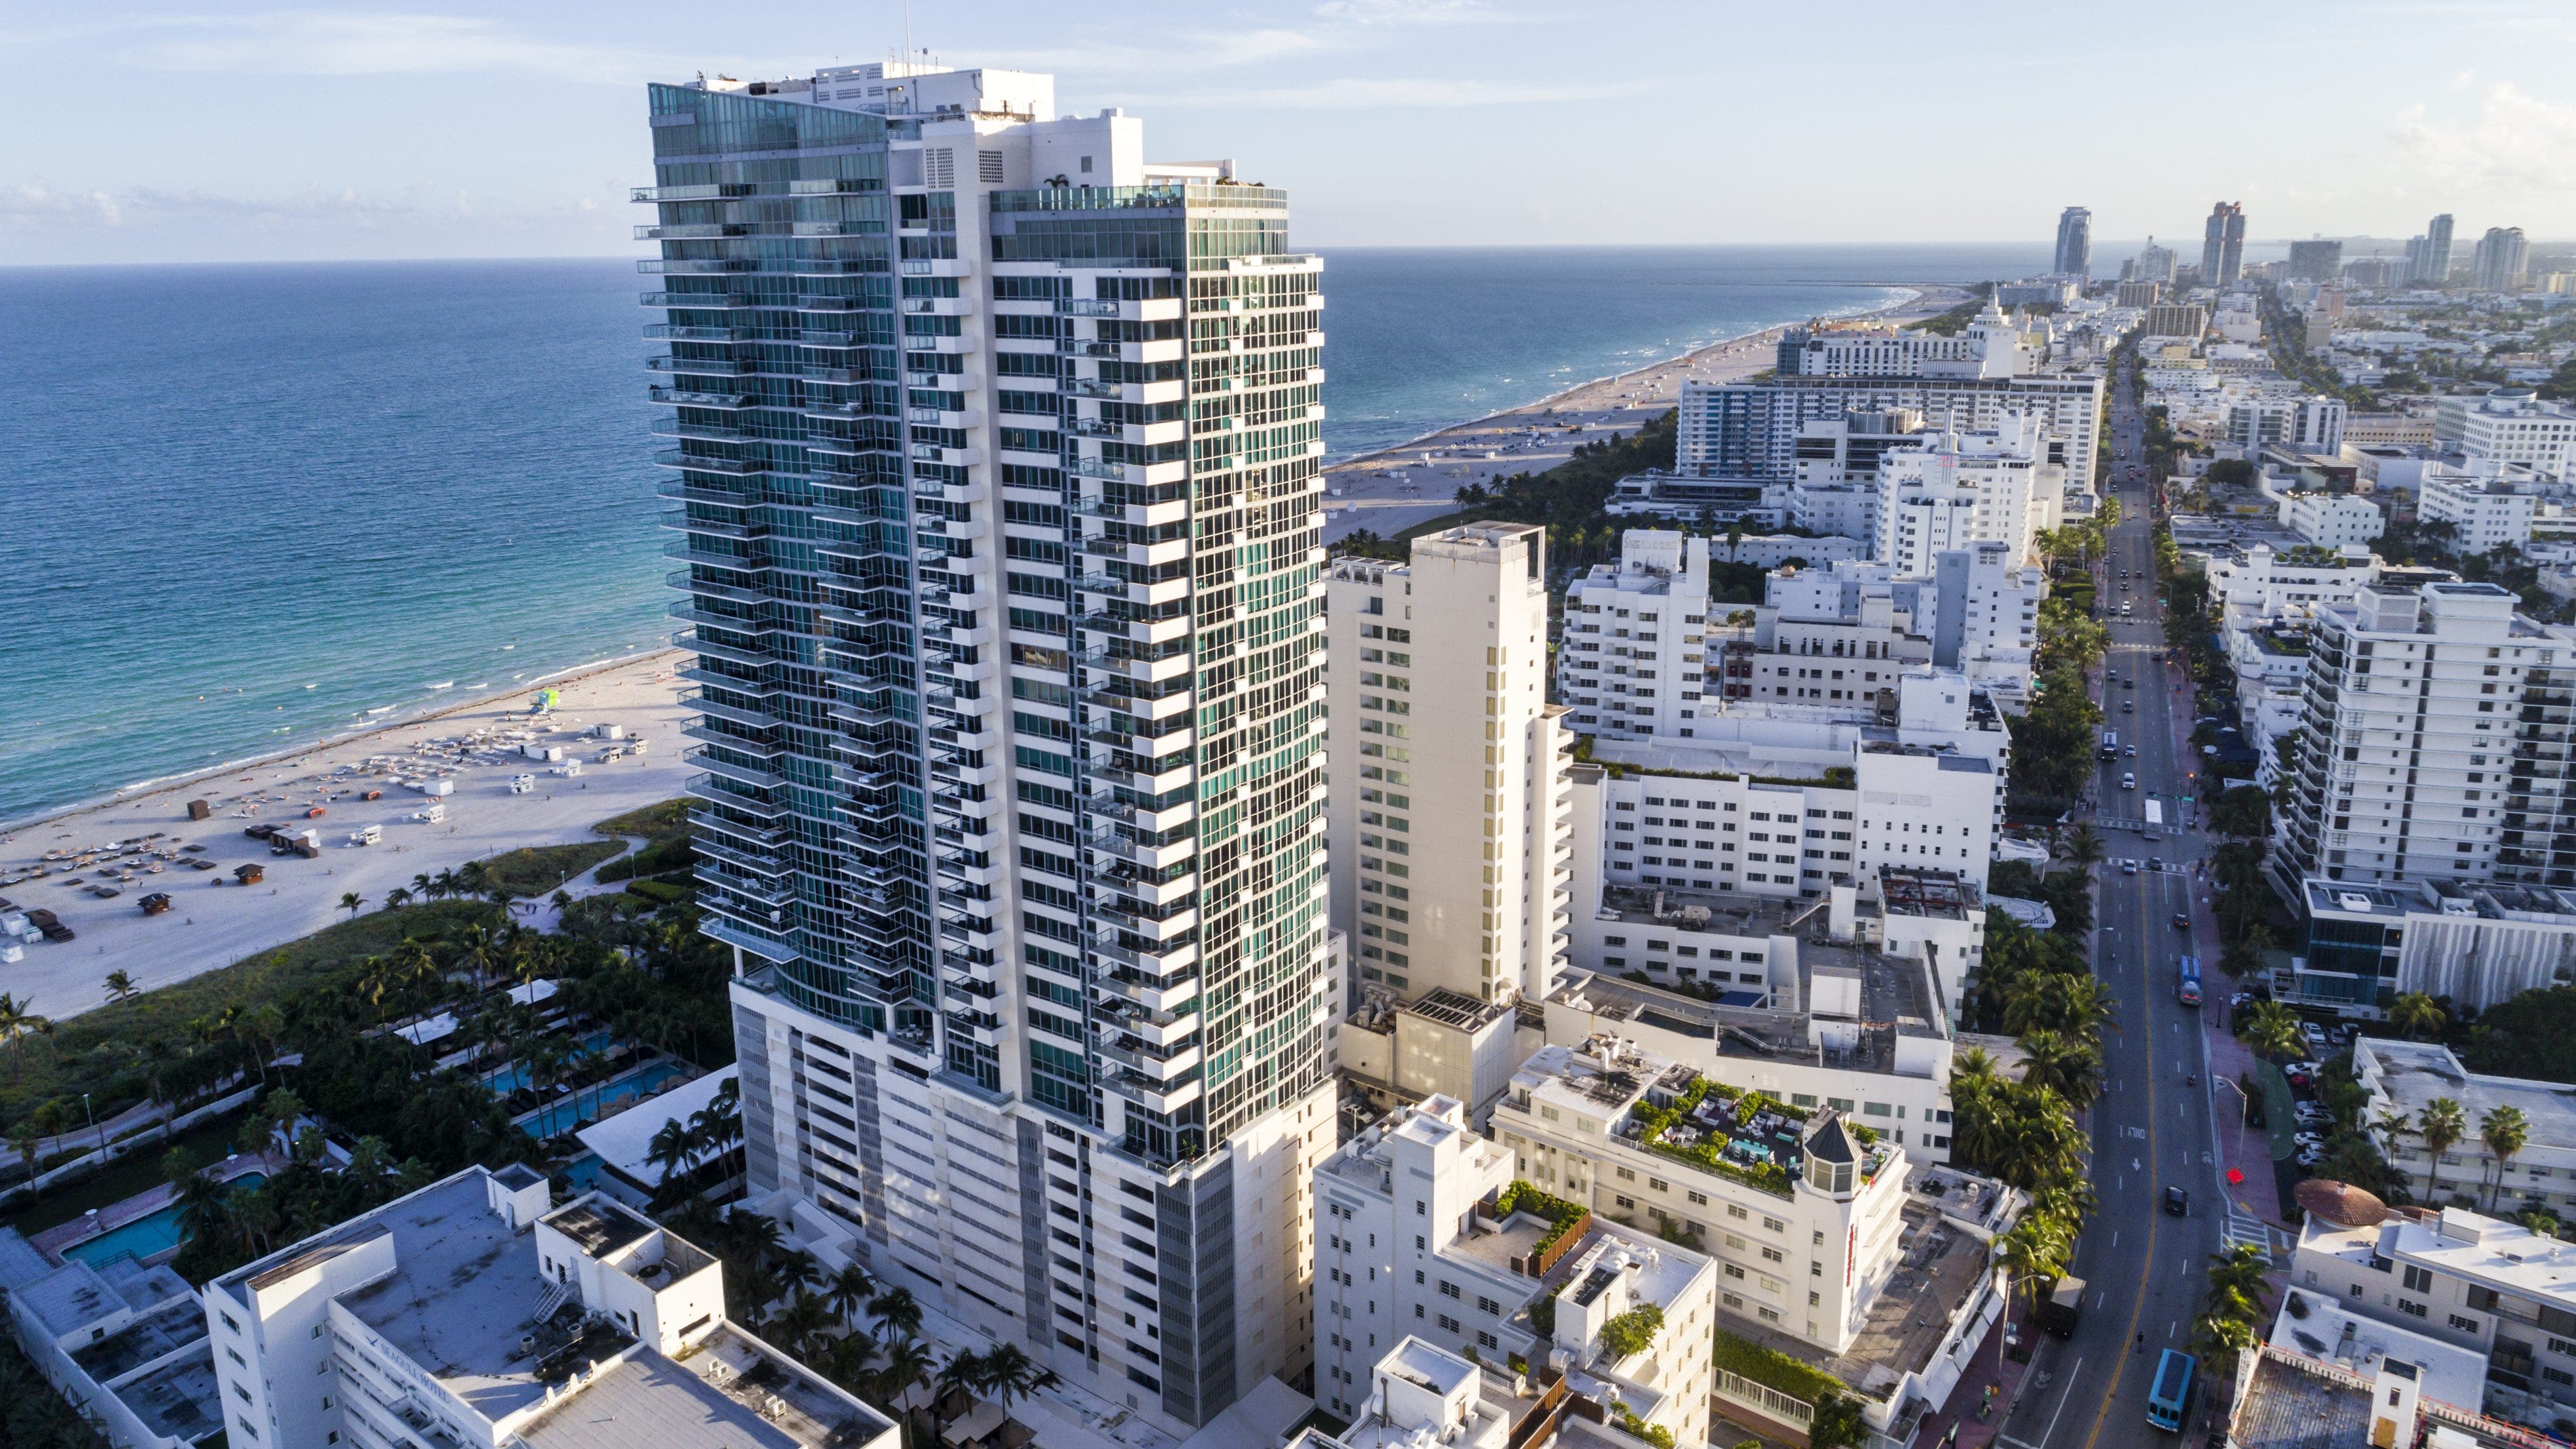 News :Los Angeles music mogul linked to Miami Beach hotel death